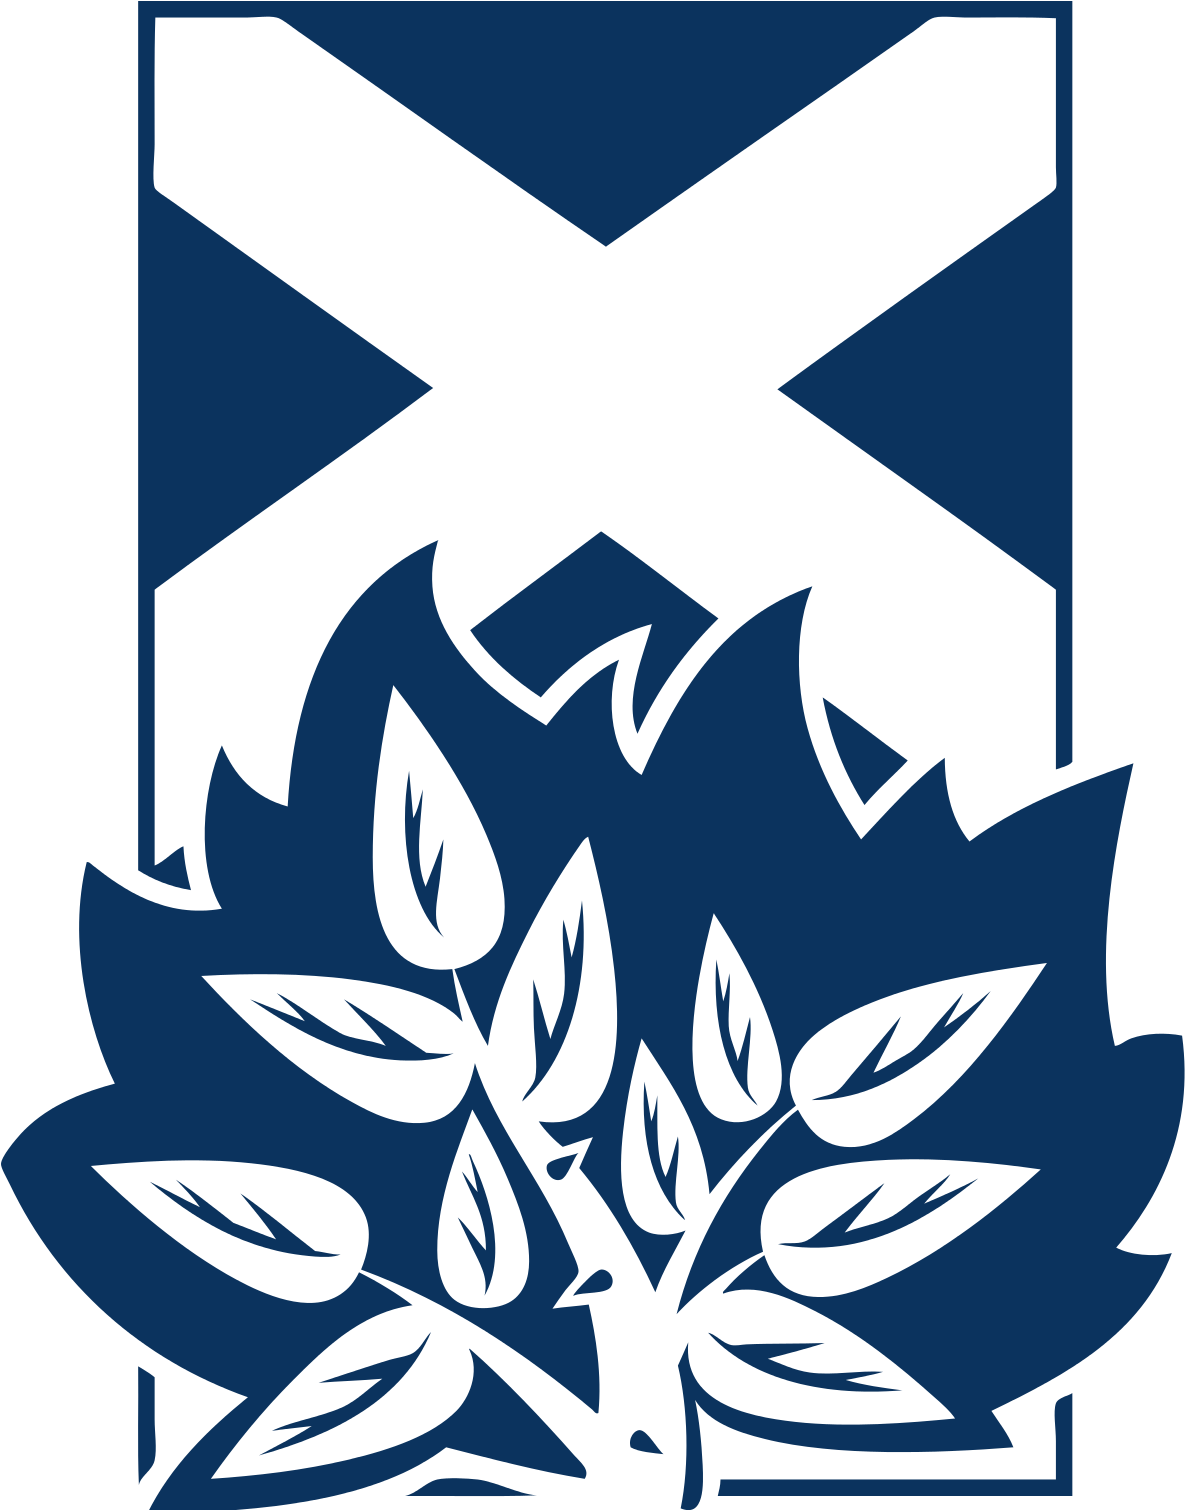 Church Of Scotland Emblem (1200x1509)